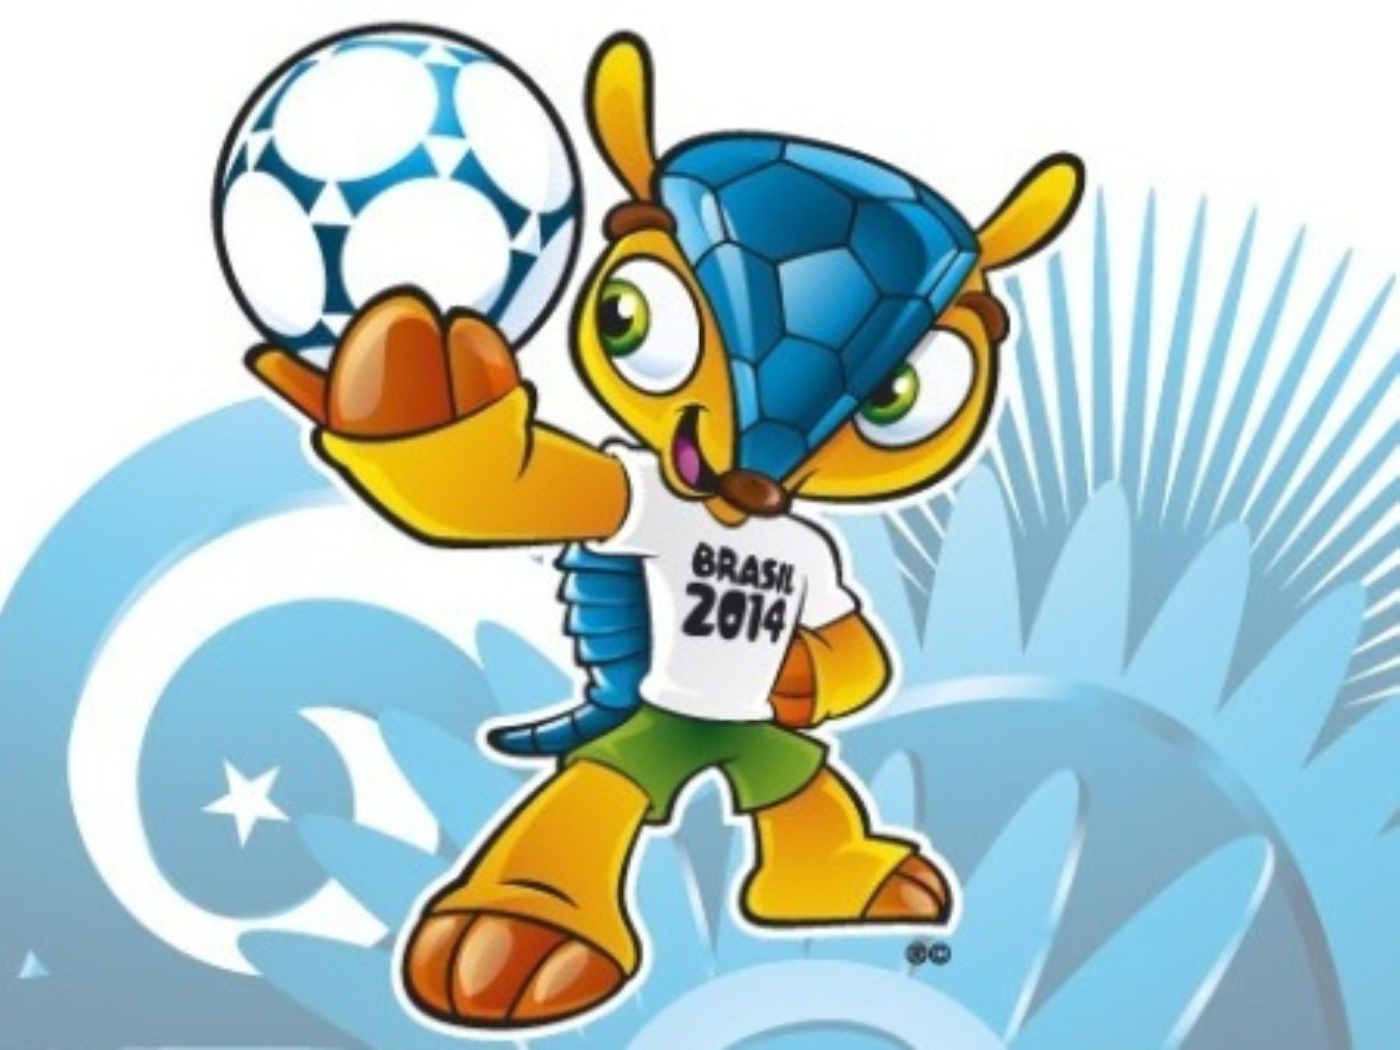 Fuleko - mascot of the World Cup in Brazil 2014